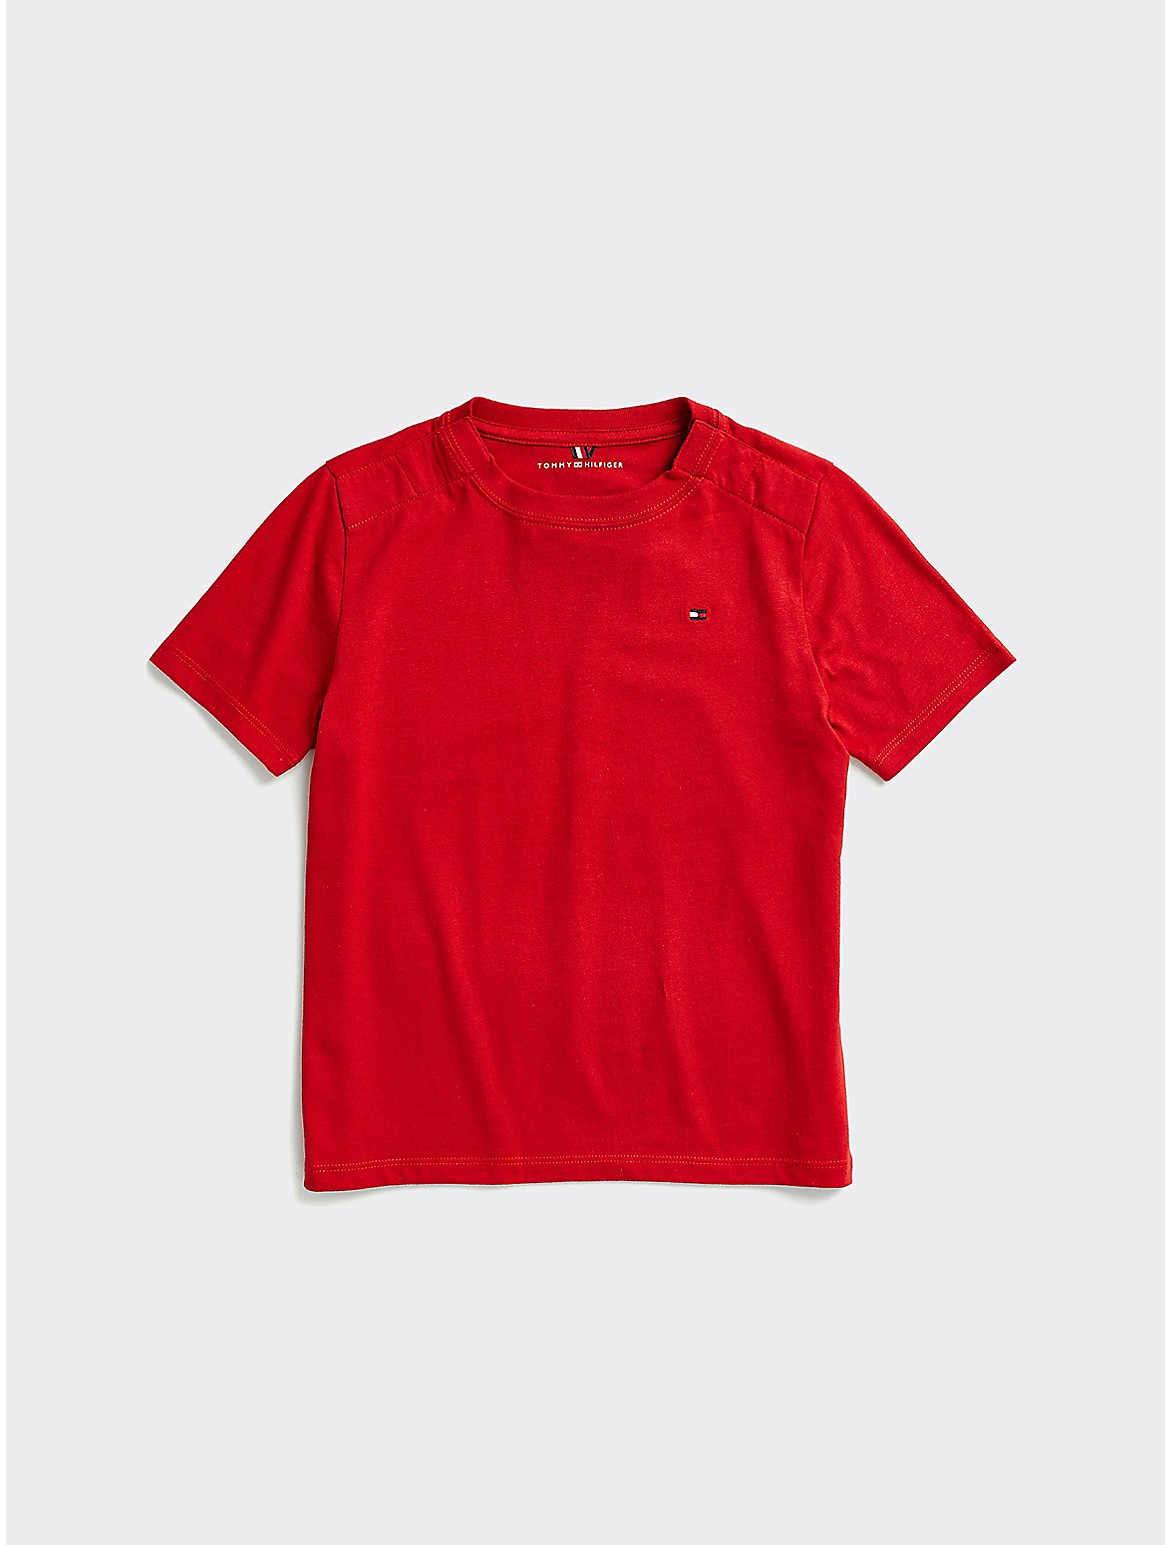 Tommy Hilfiger Boys' Classic T-Shirt - Red - XL